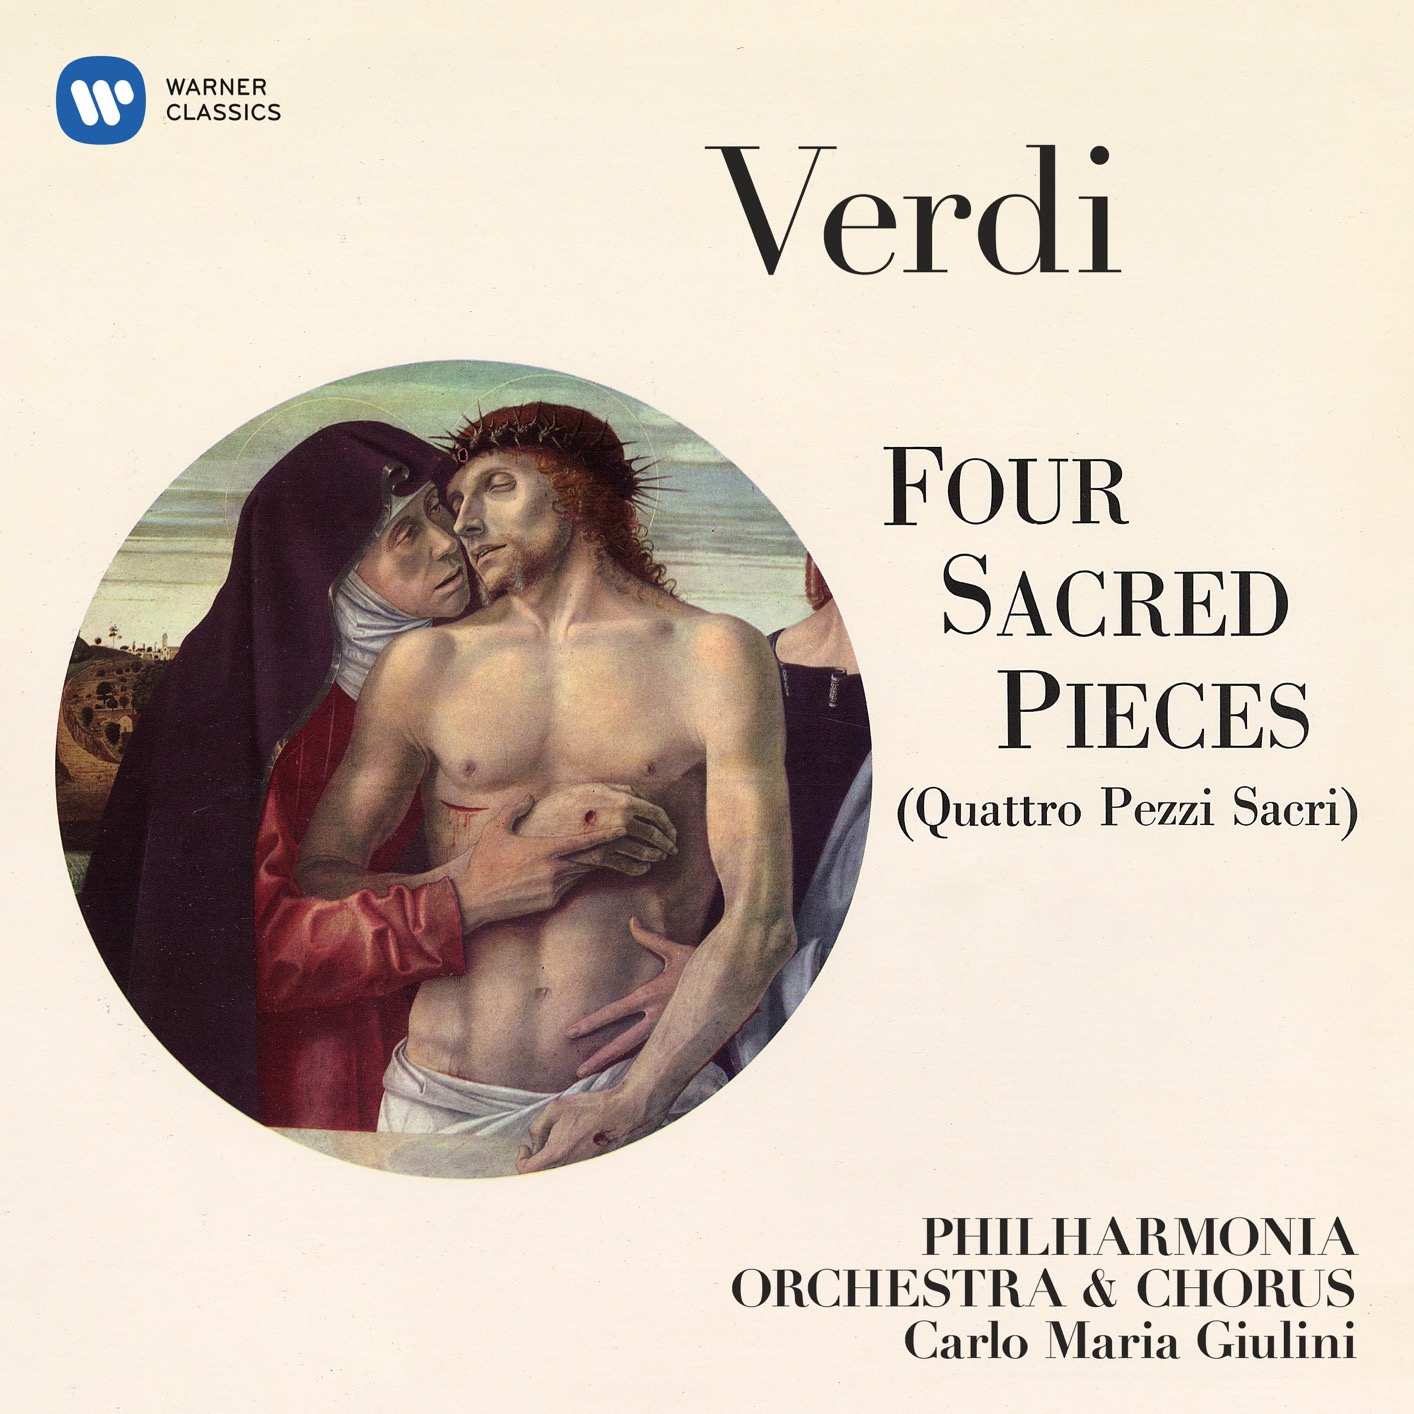 Philharmonia Orchestra, Philharmonia Chorus & Carlo Maria Giulini - Verdi: Four Sacred Pieces (Quattro Pezzi Sacri) (Remastered) (1963/2020) [FLAC 24bit/192kHz]